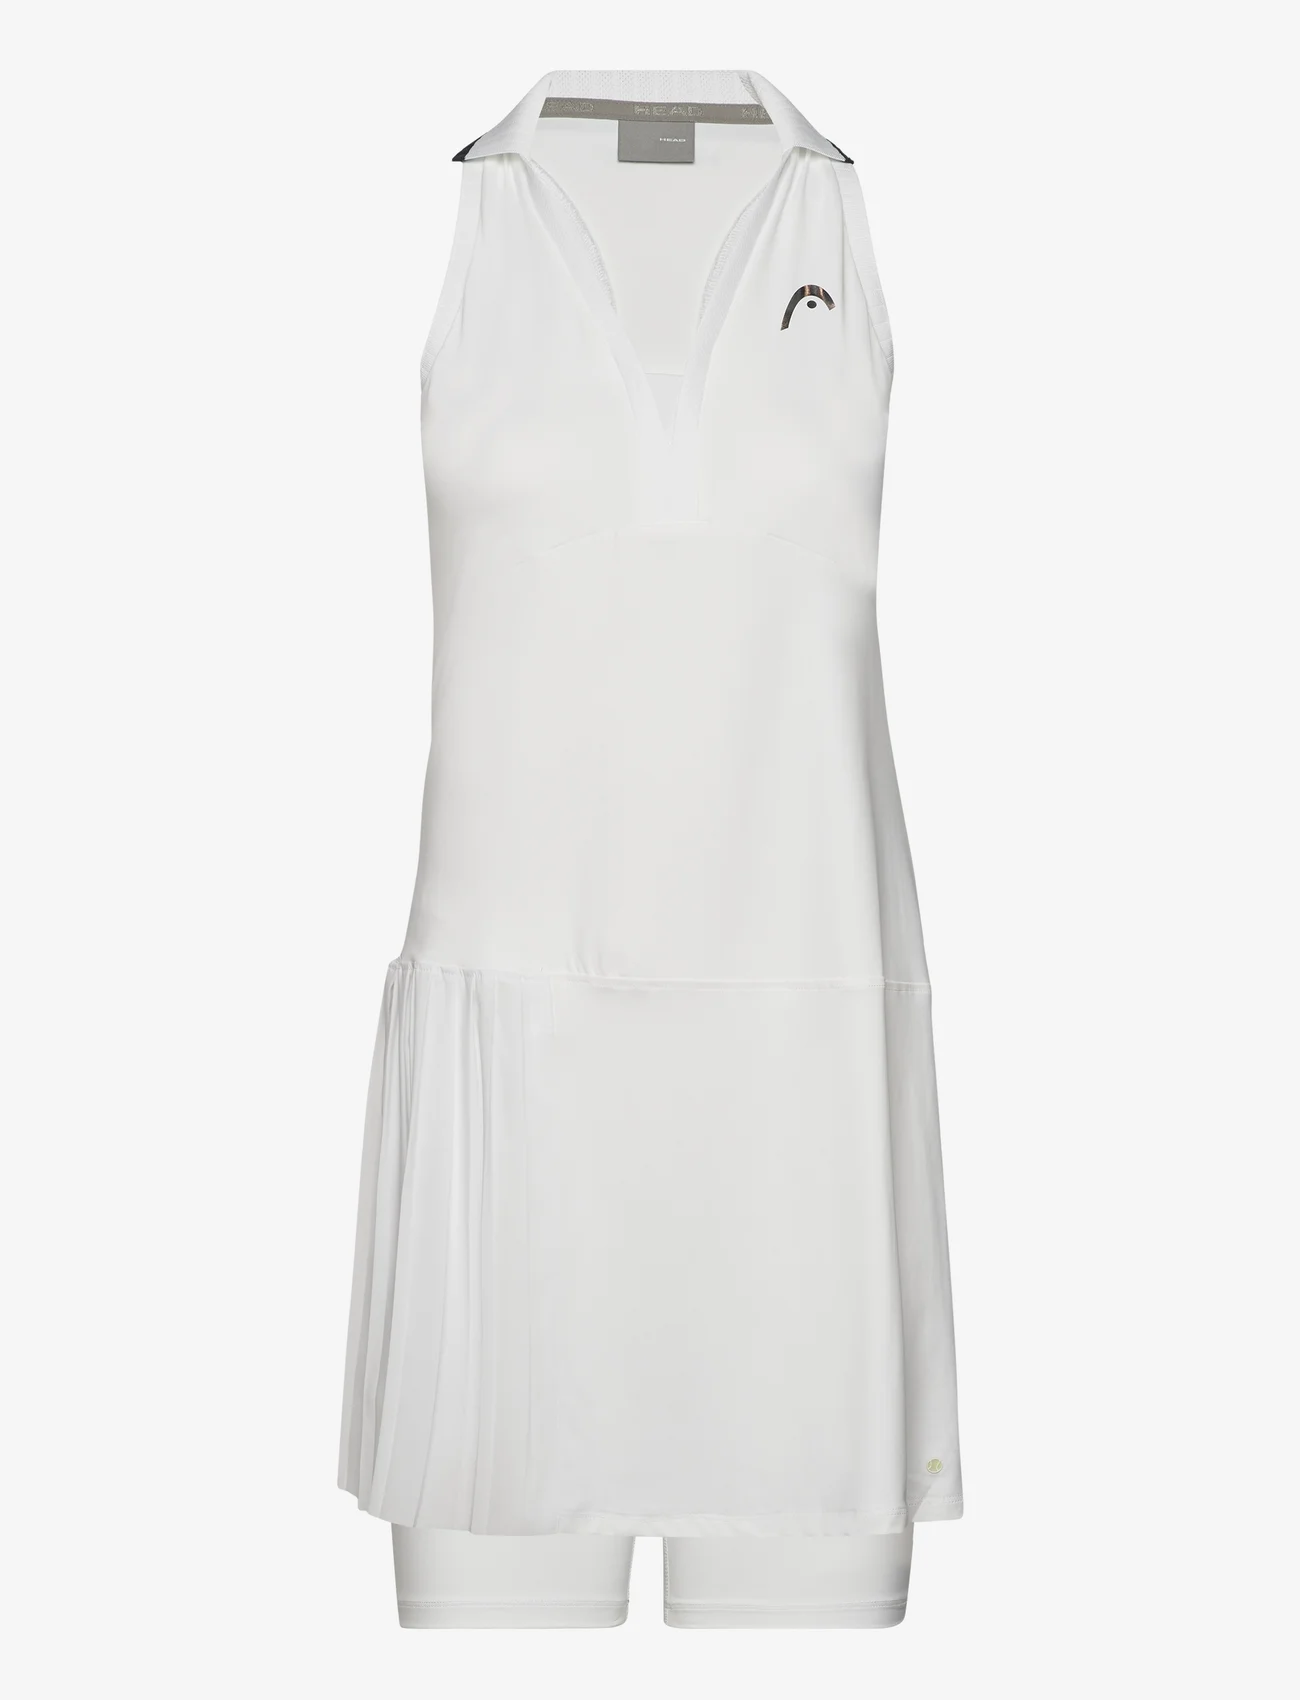 Head - PERFORMANCE Dress Women - sportkleider - white - 0